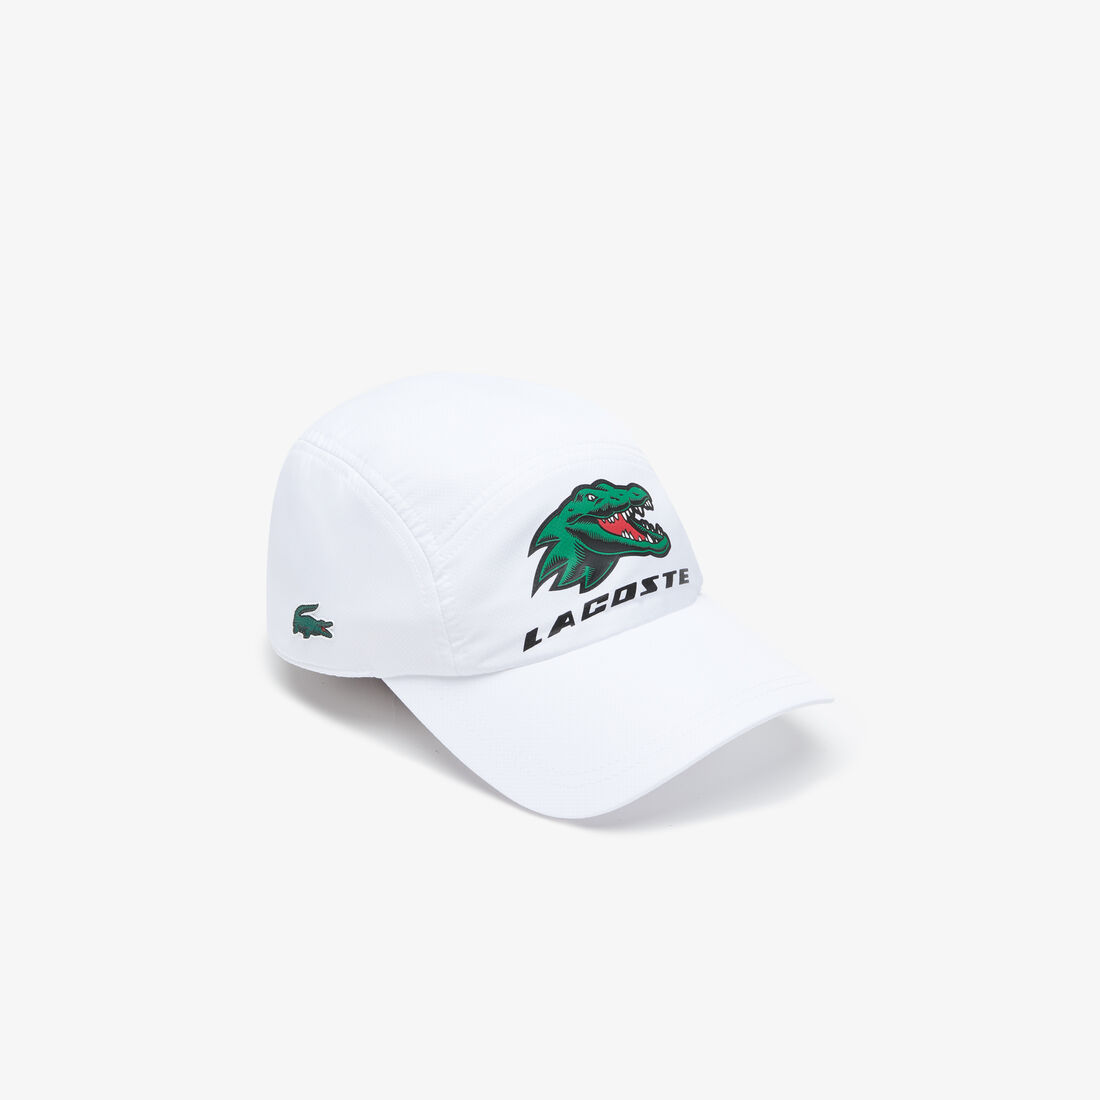 Lacoste Hats Cheapest - Lacoste USA Sale Online